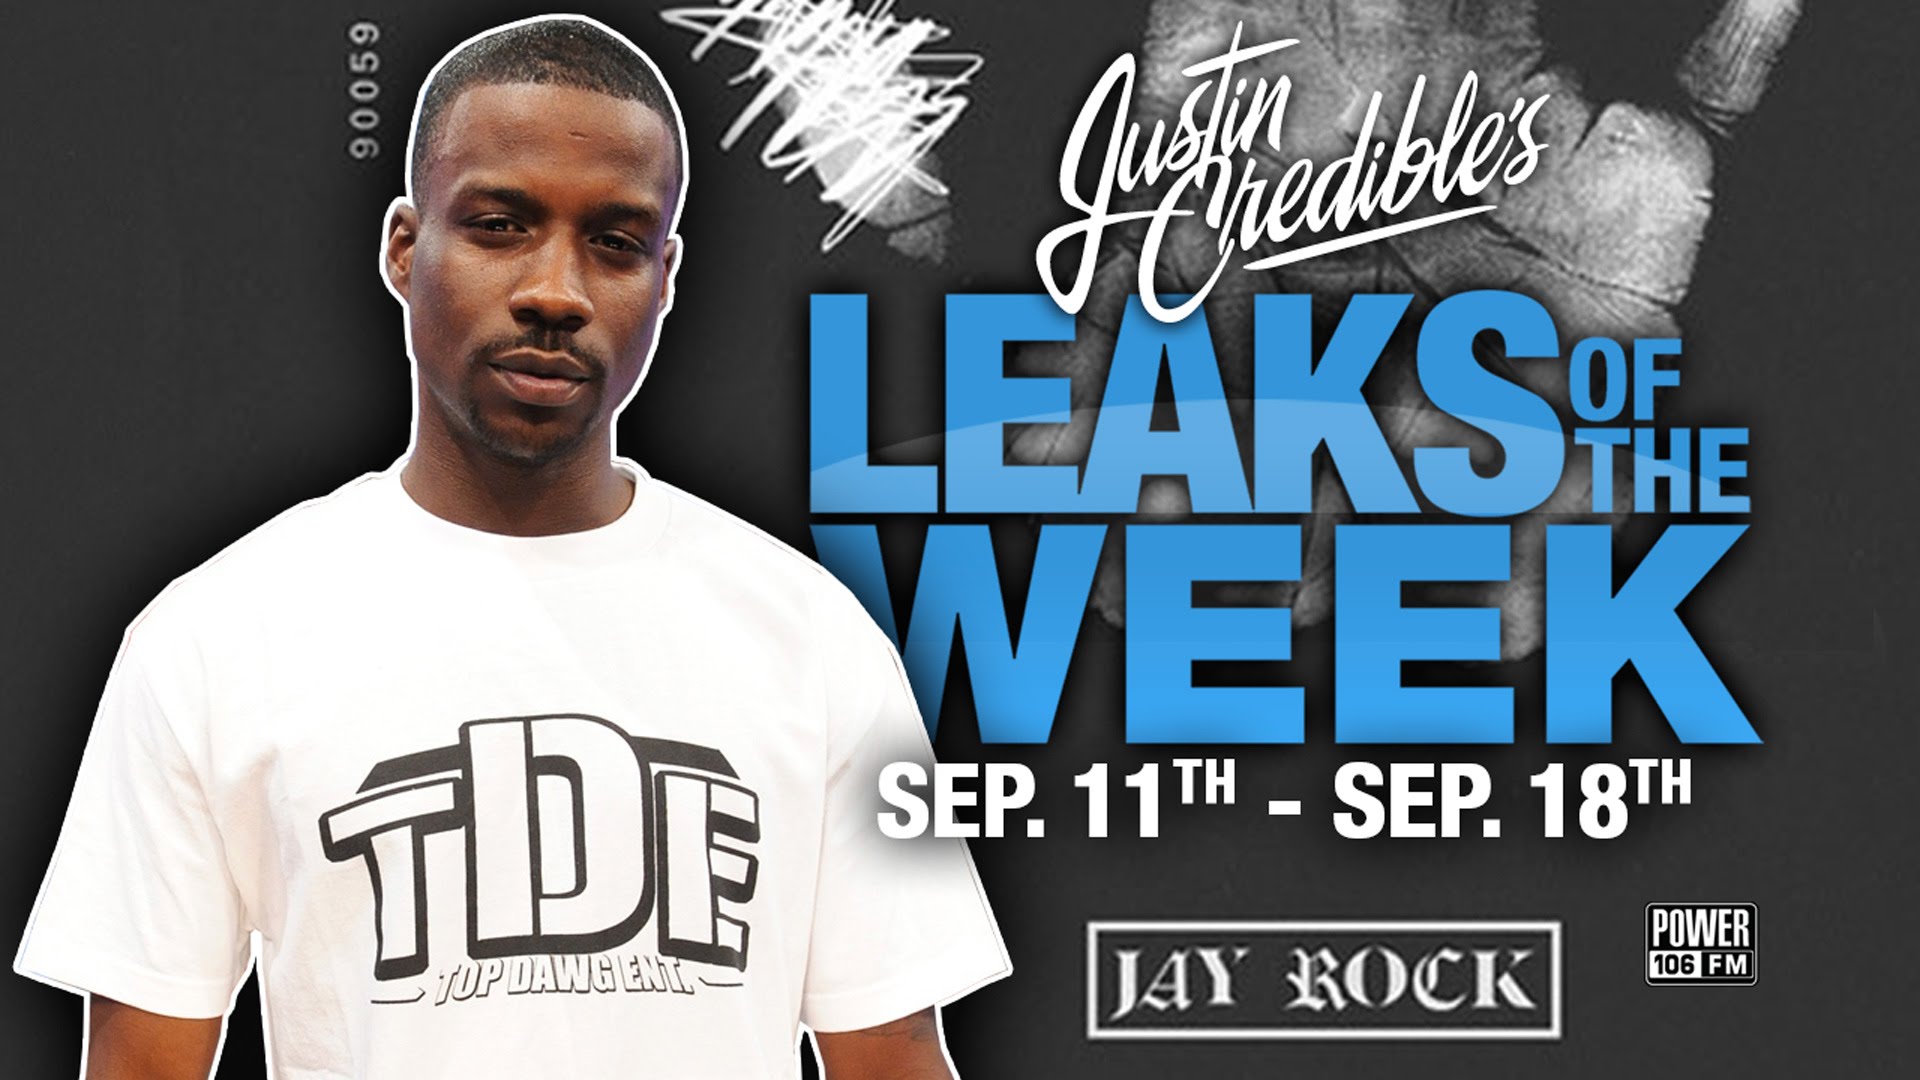 Justin Credible’s #LeaksOfTheWeek w/ Jay Rock, Kendrick Lamar & Wiz Khalifa (Video)